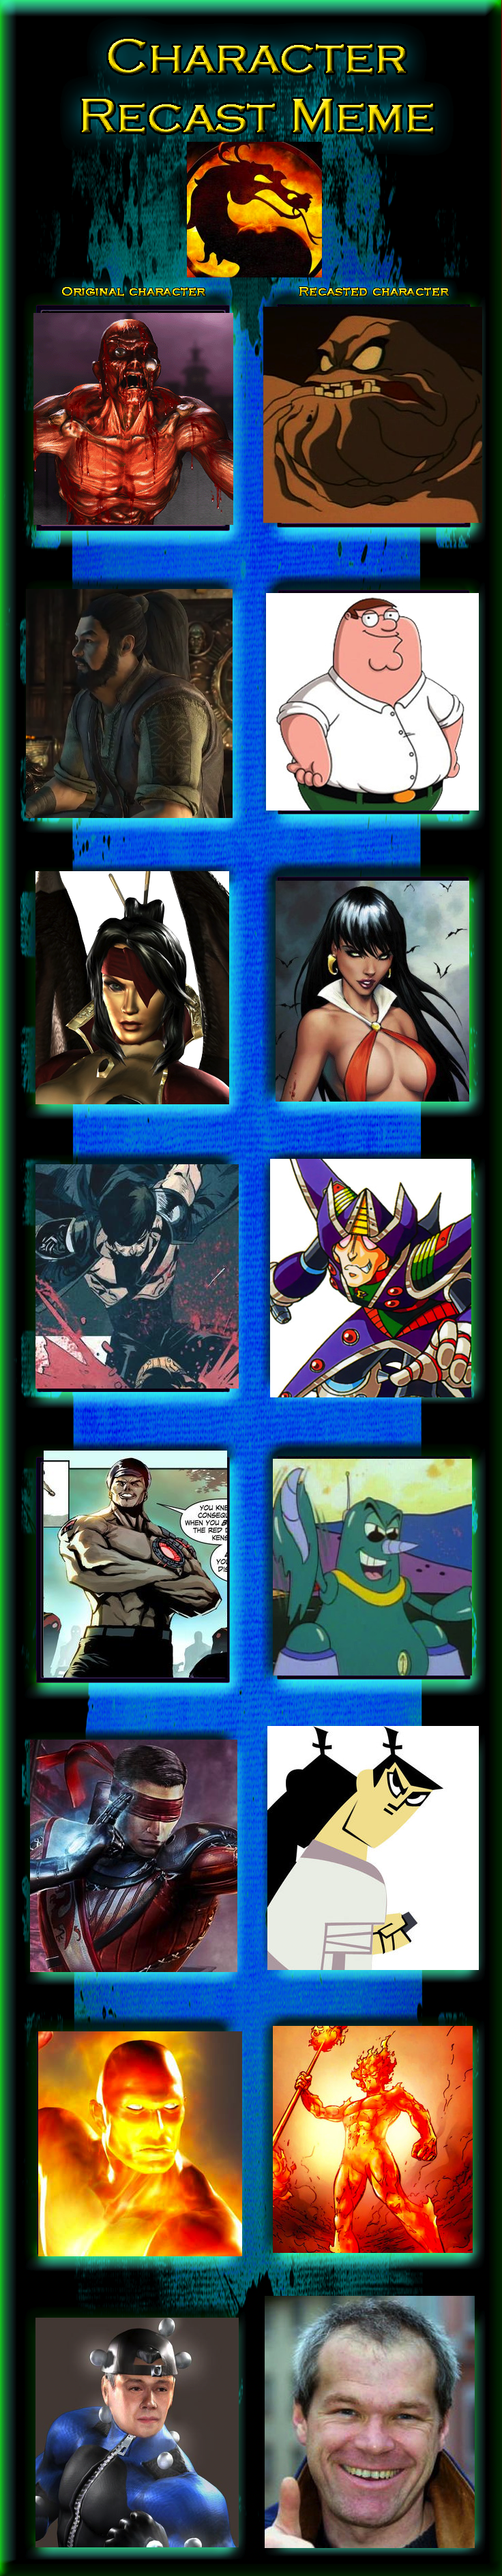 Mortal Kombat characters - my tier ranking by RyuKangLivesAgain on  DeviantArt